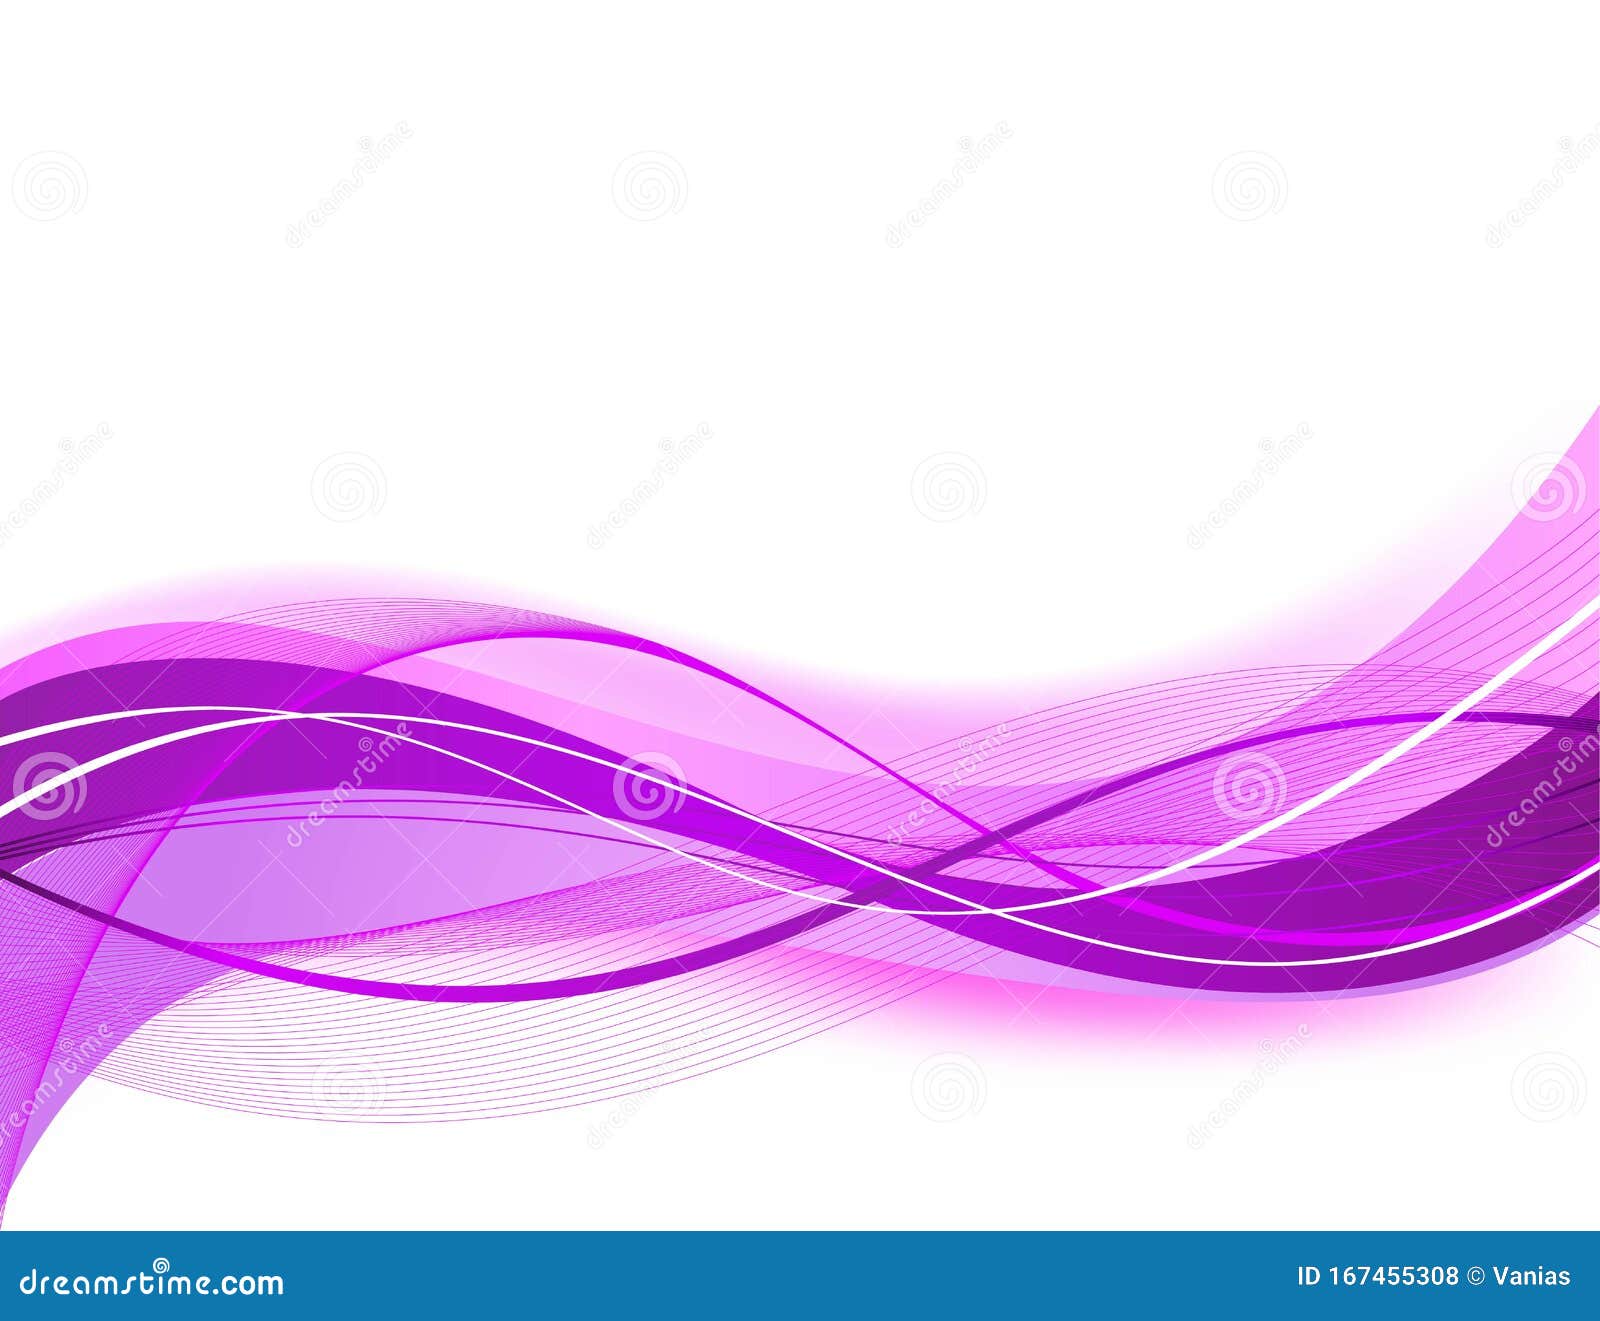 Abstract Vector Background Illustration Art Design Pink Purple Curve Wave  Stock Vector - Illustration of vector, purple: 167455308